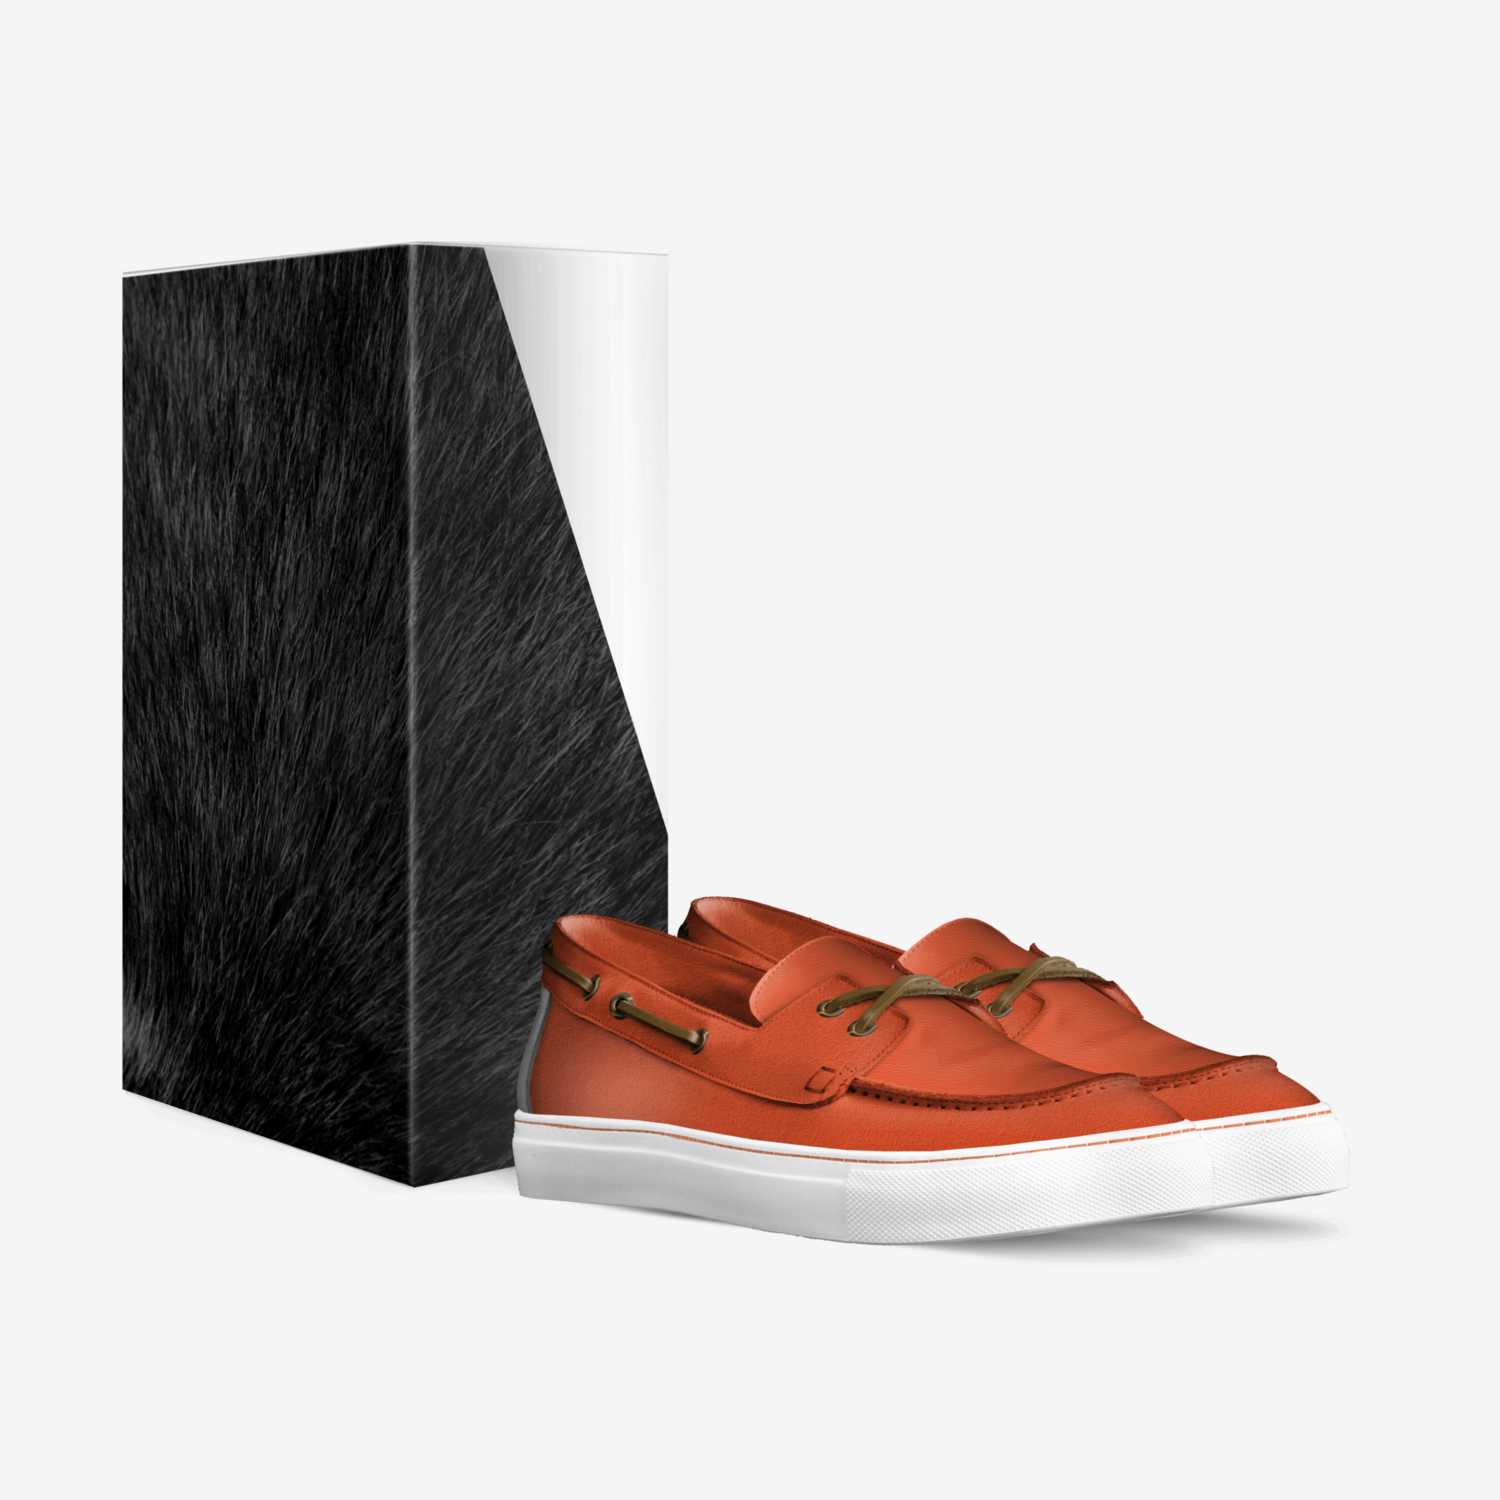 Corgi custom made in Italy shoes by Jordan Aschwege | Box view